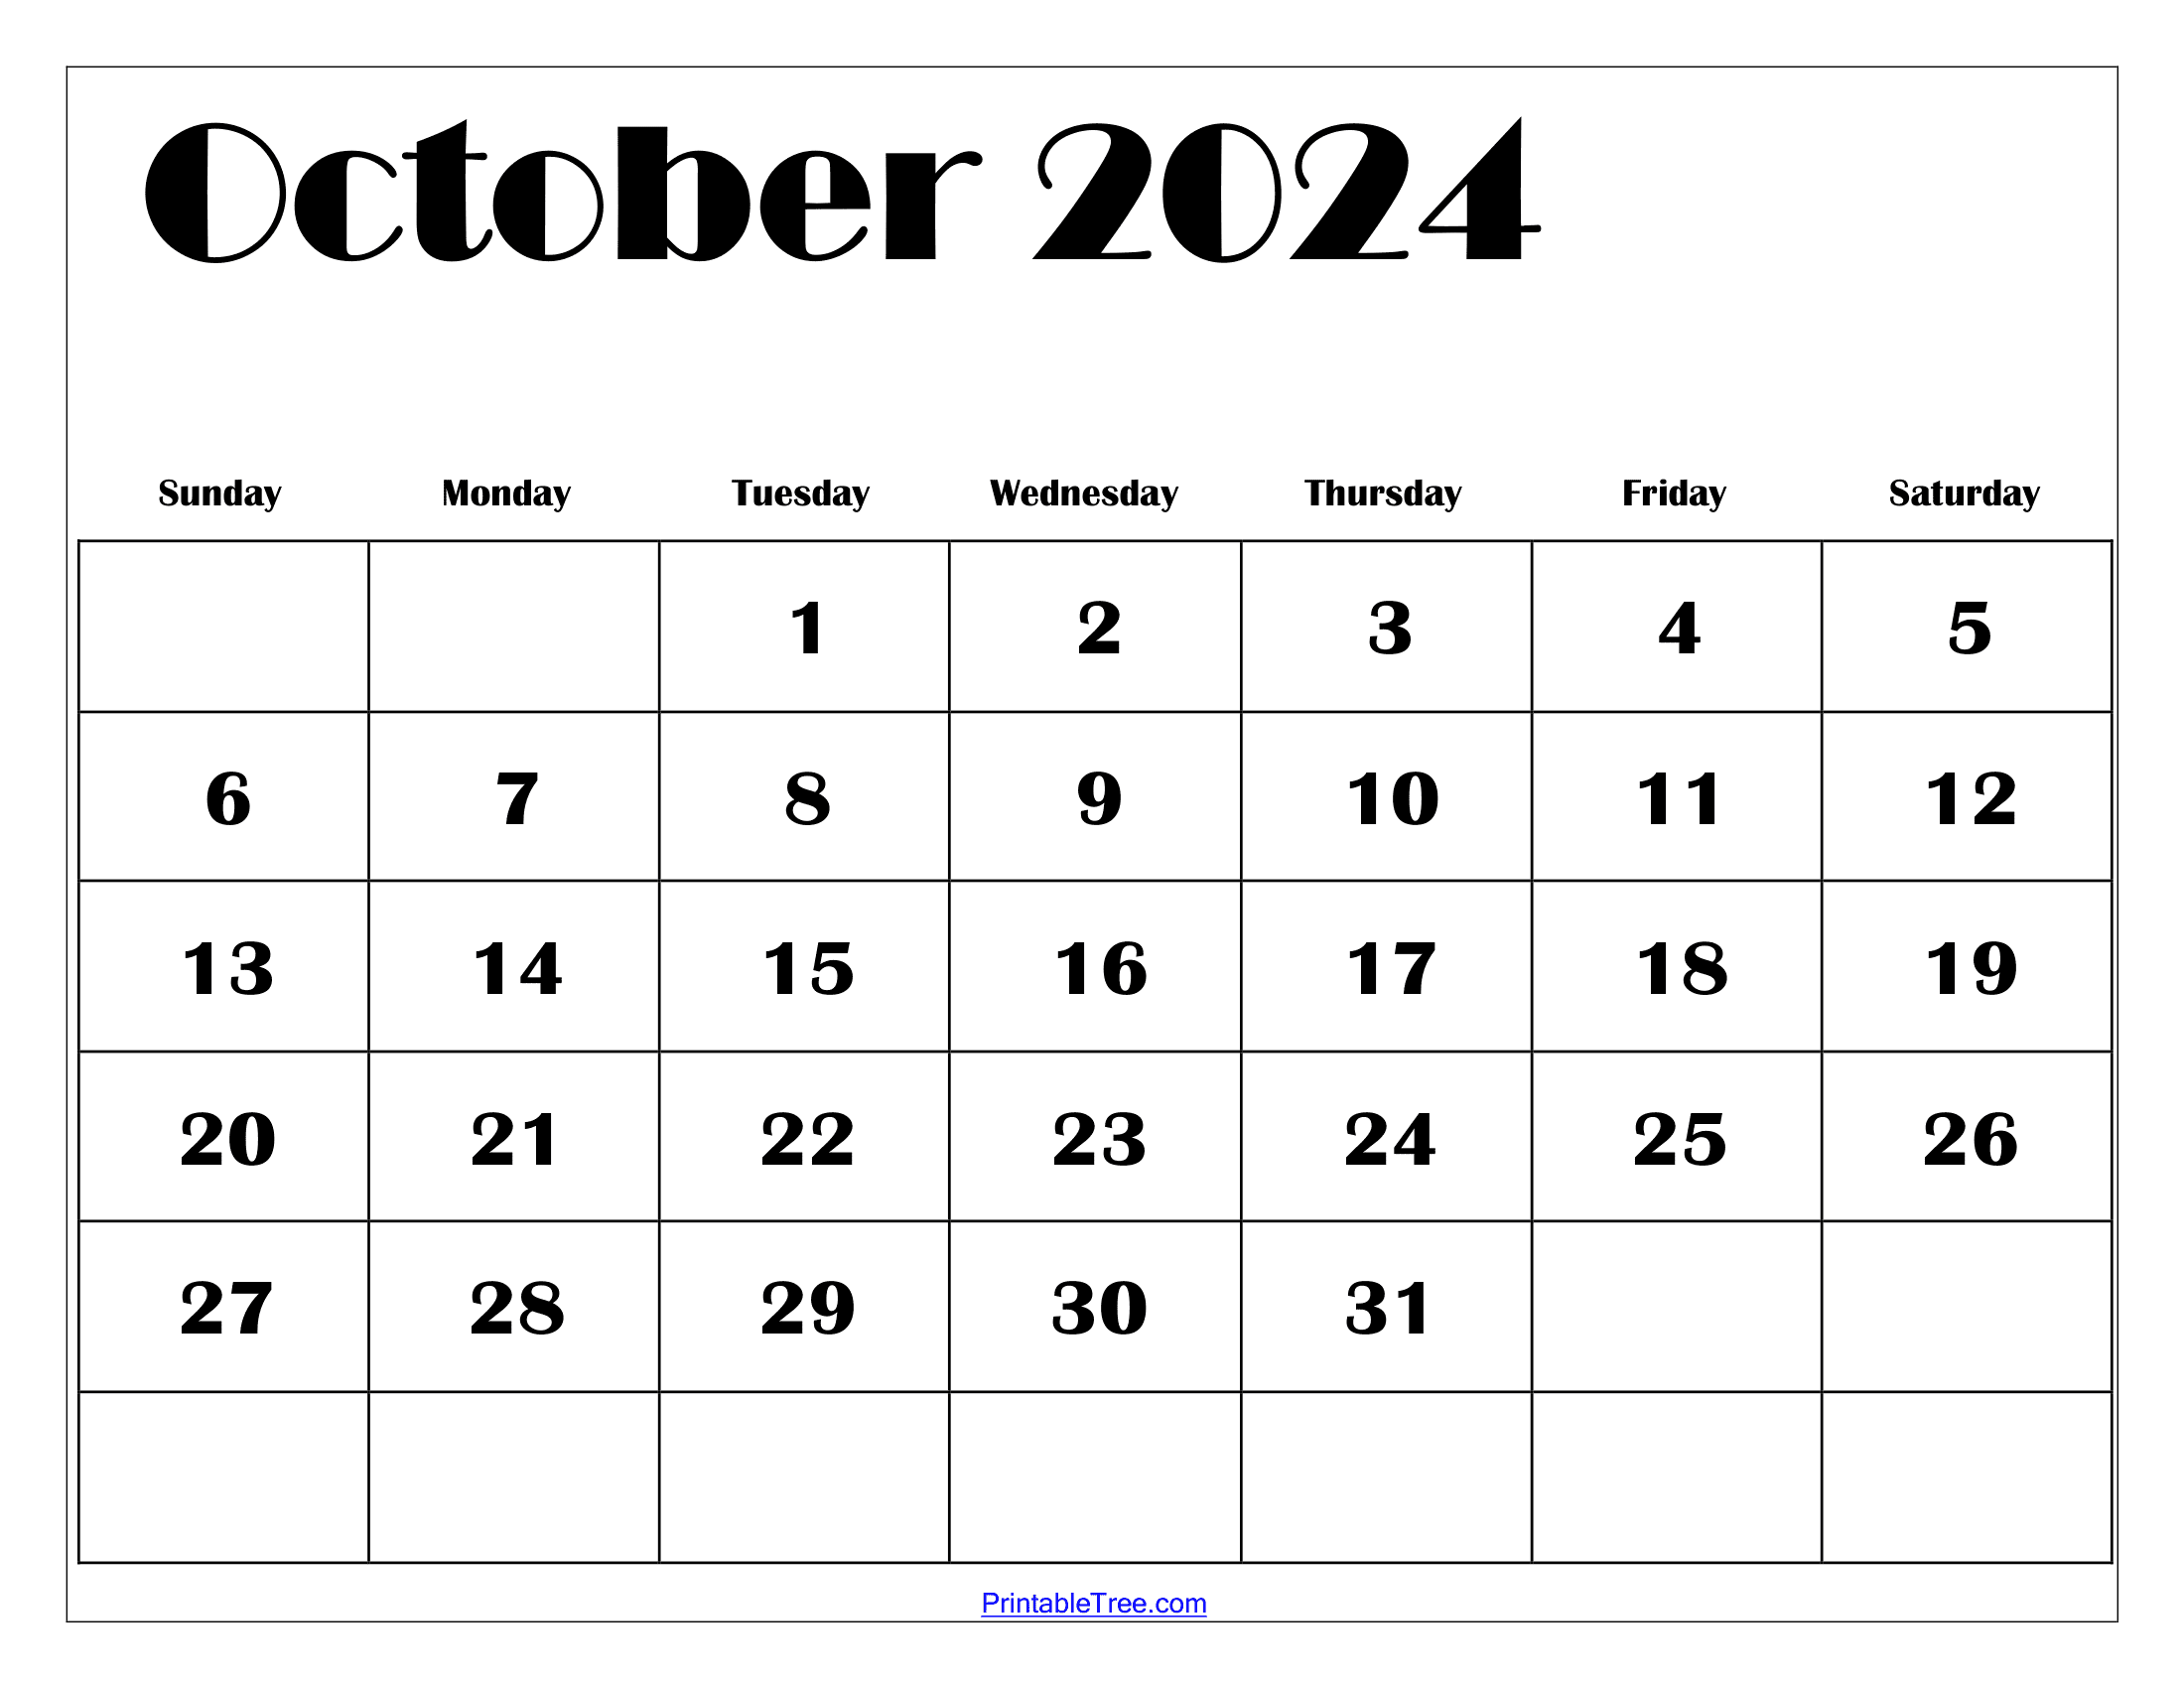 October 2024 Calendar Printable Pdf Free Templates With Holidays for Printable October 2024 Calendar